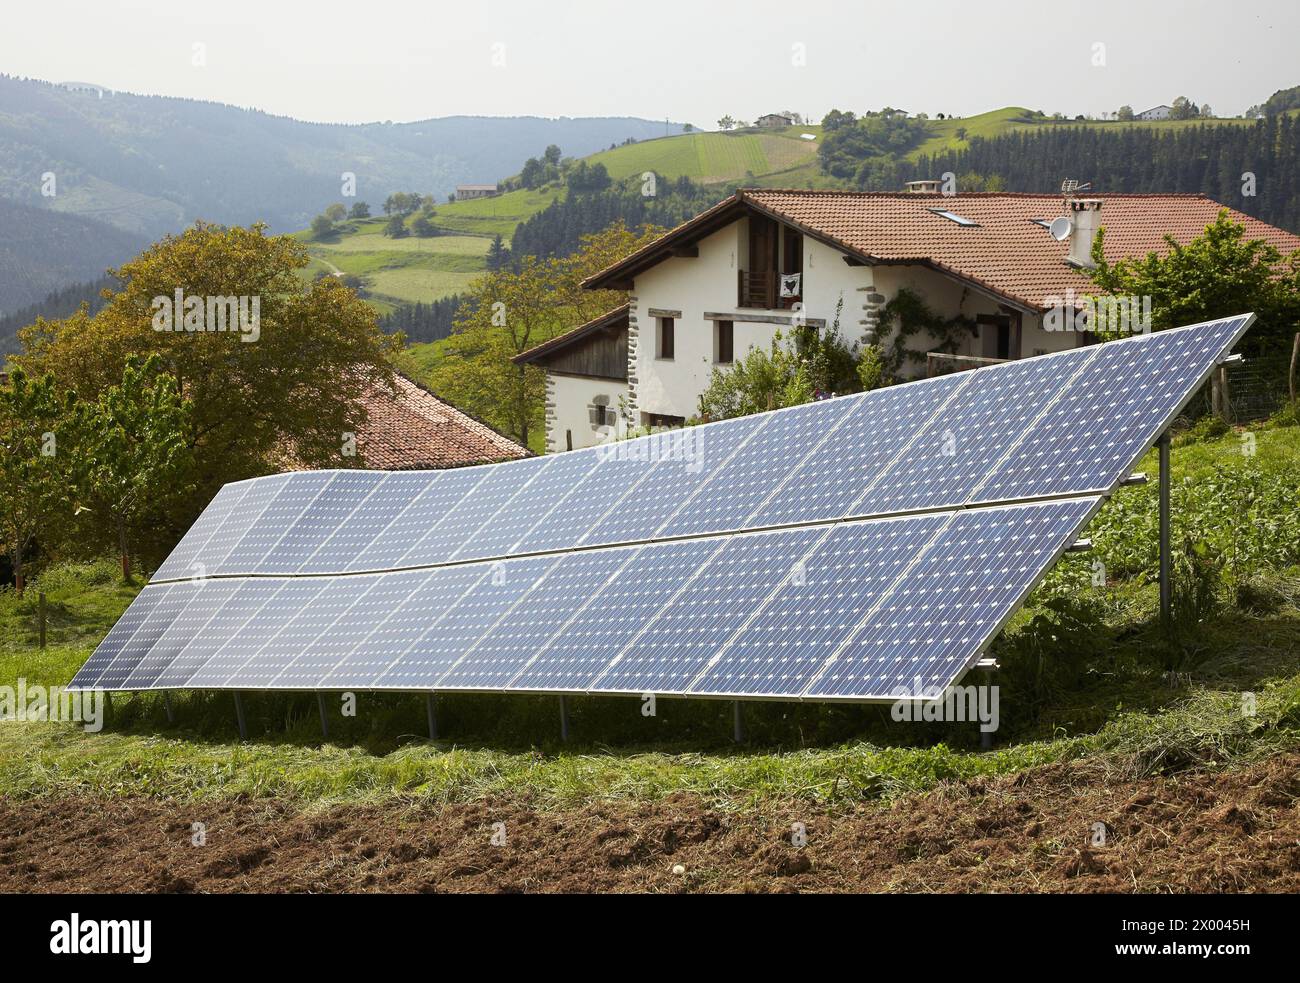 Solar panels, Beizama, Guipuzcoa, Basque Country, Spain. Stock Photo